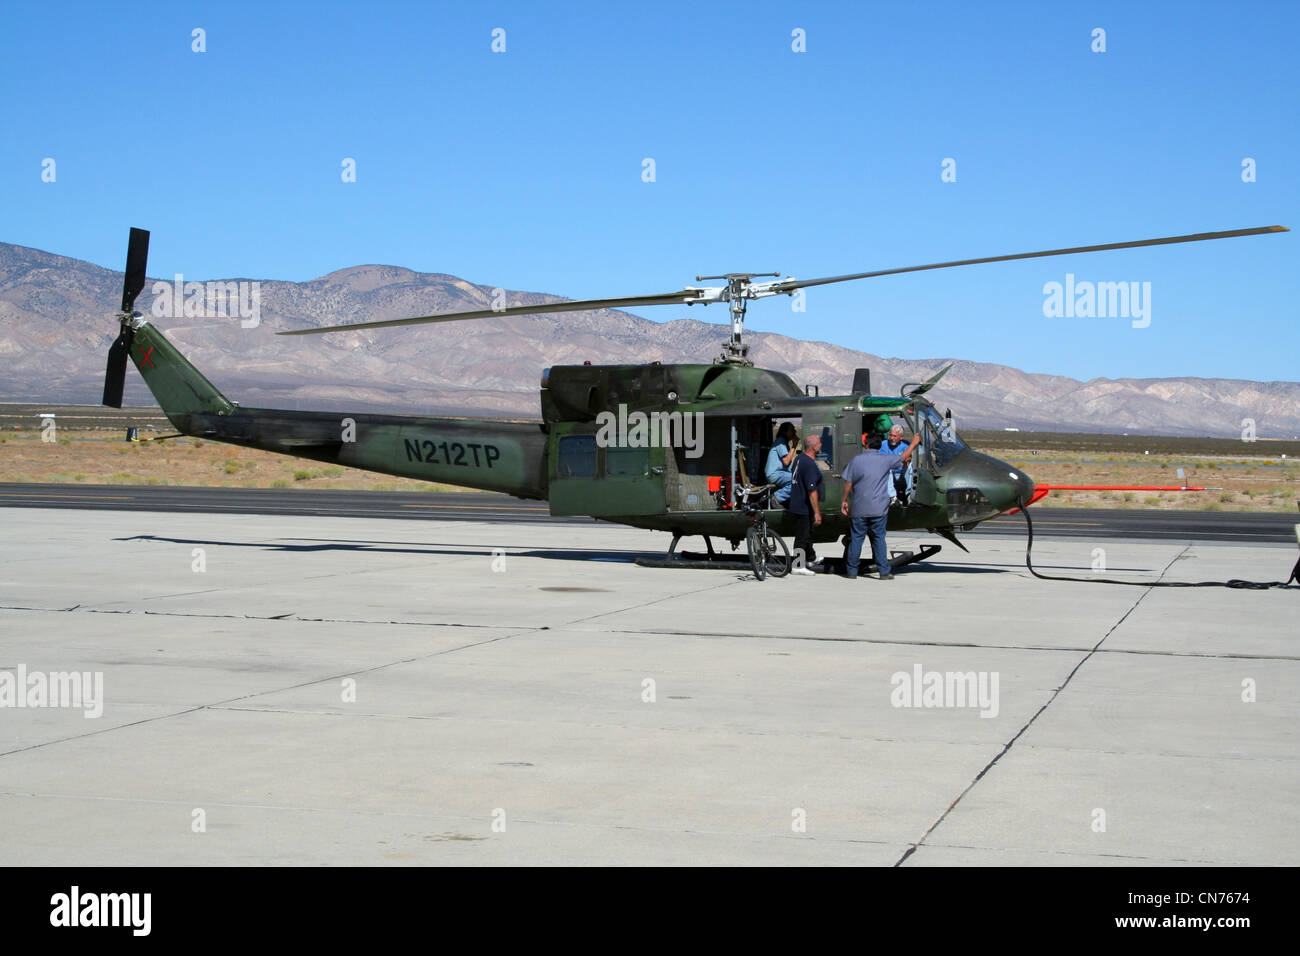 Prova nazionale scuola pilota uh-1n huey a mojave airfield, california, Stati Uniti d'America Foto Stock